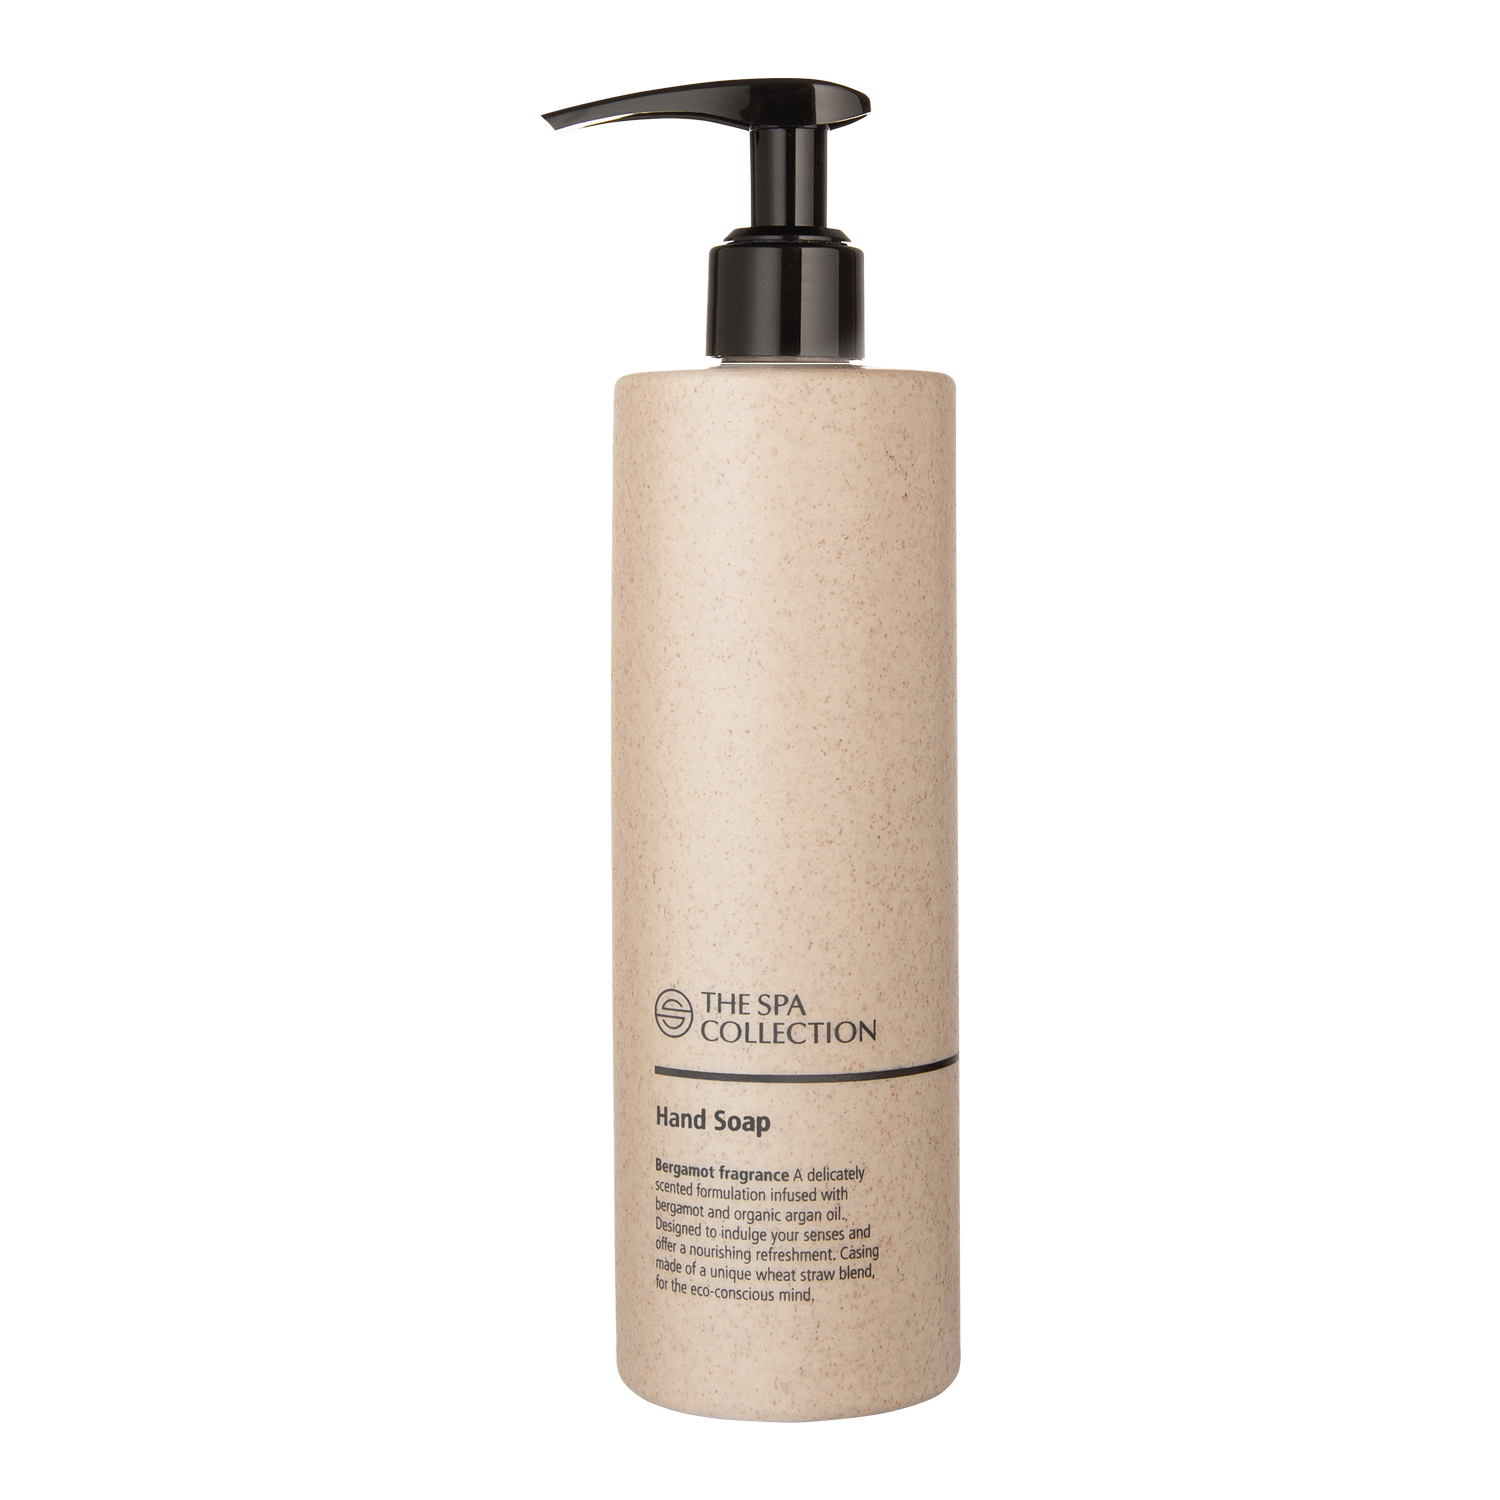 Hand soap - 400ml wheatstraw bottle - The Spa Collection Bergamot